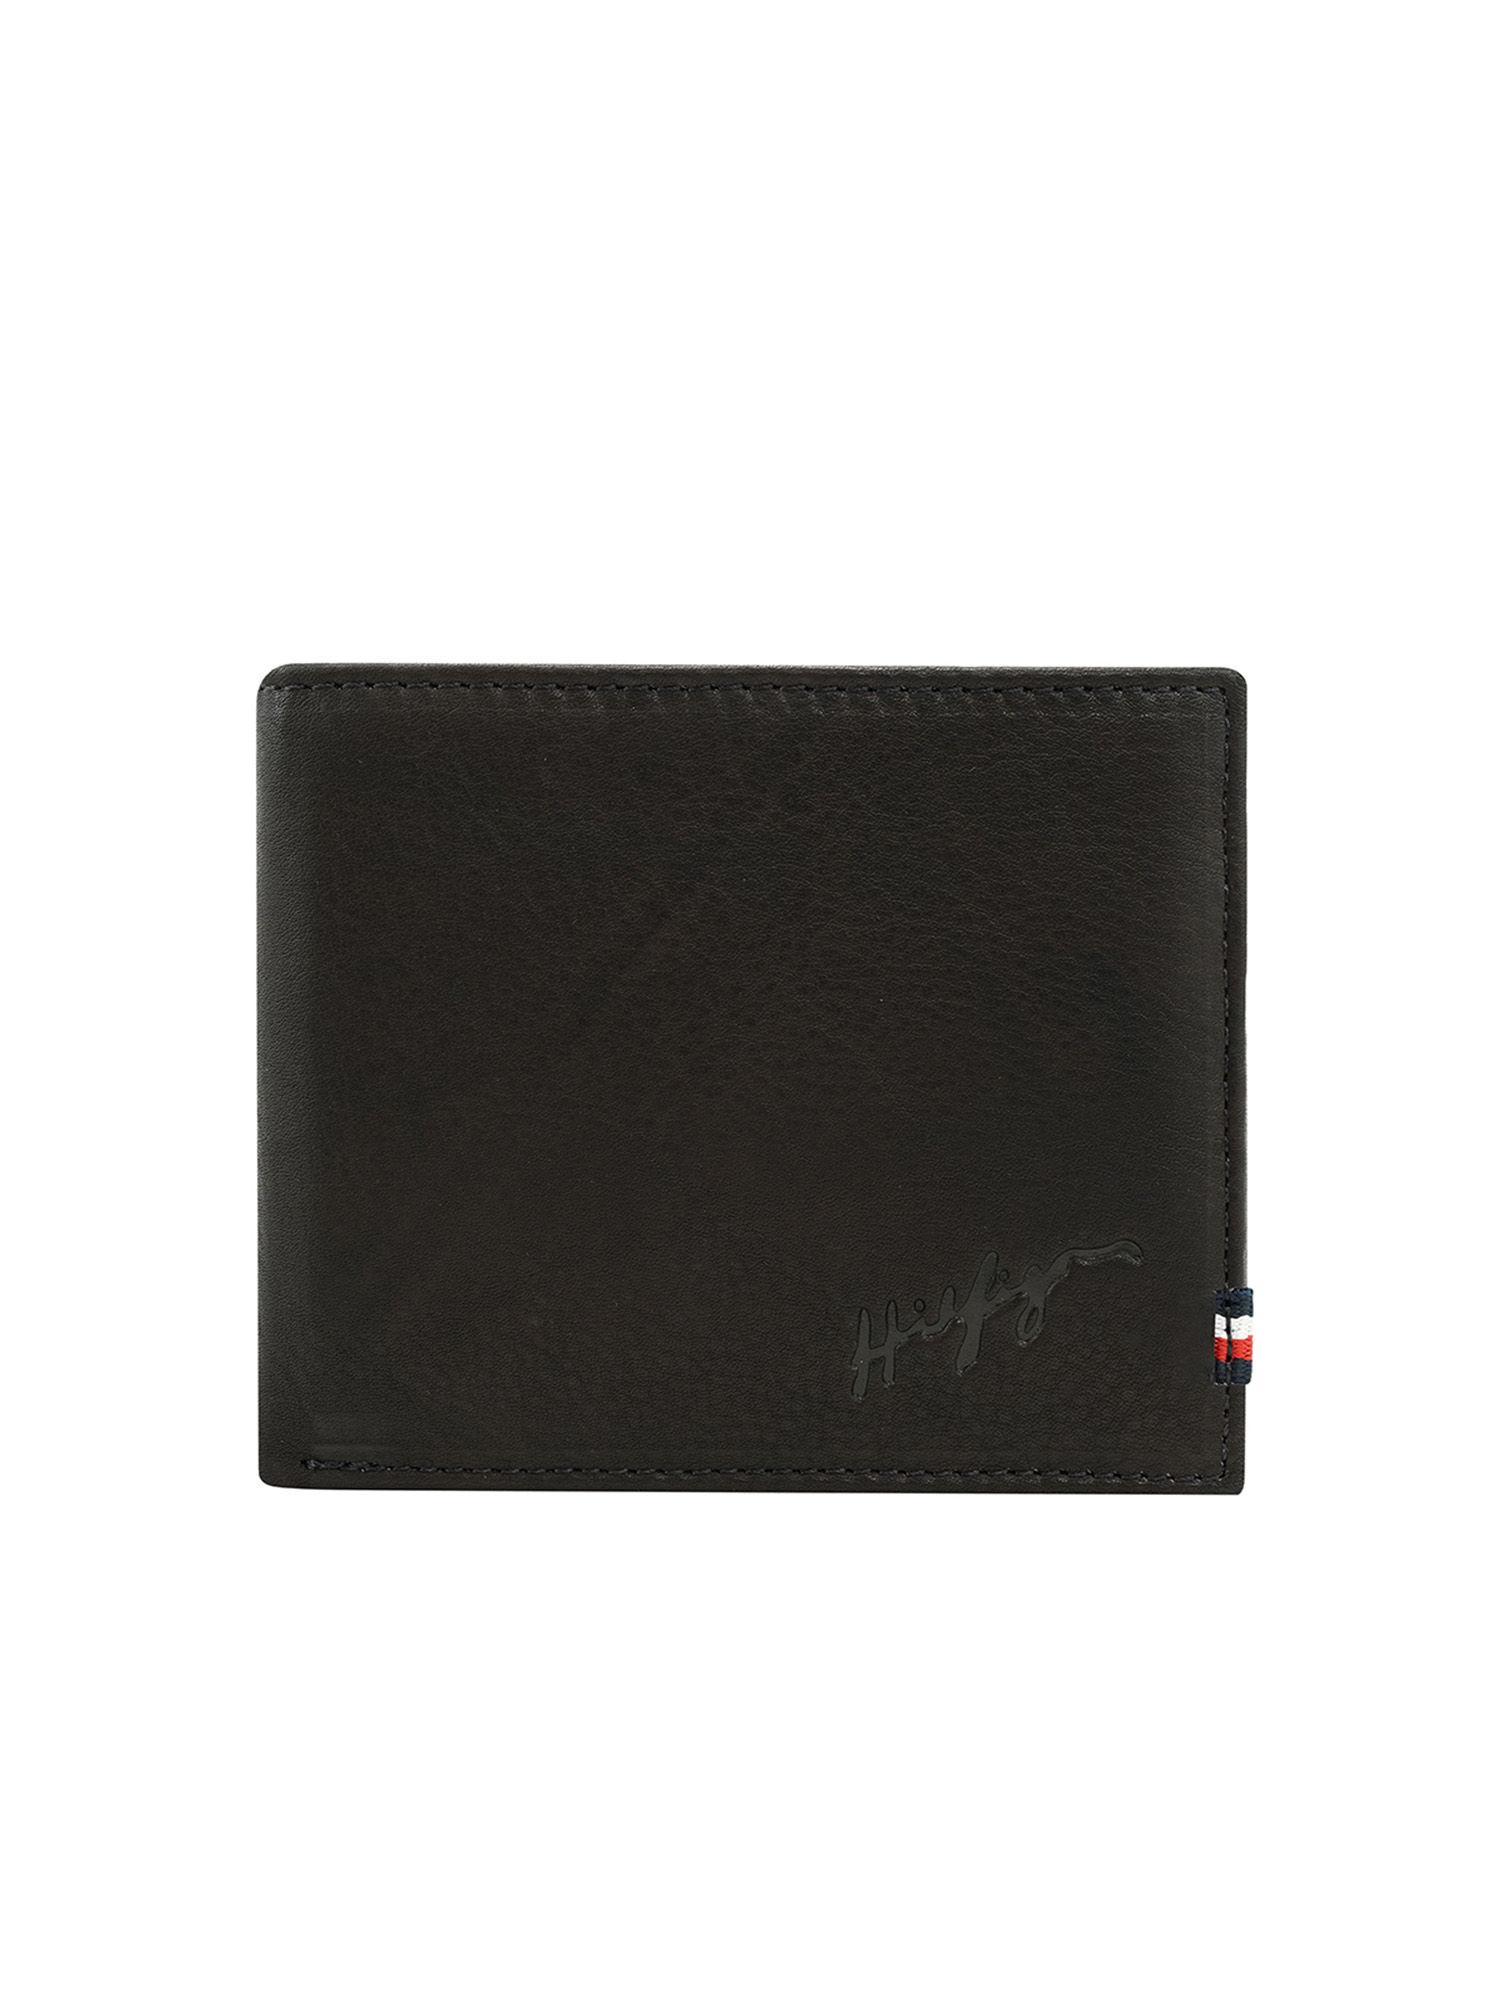 brown-branden-pass-case-wallet